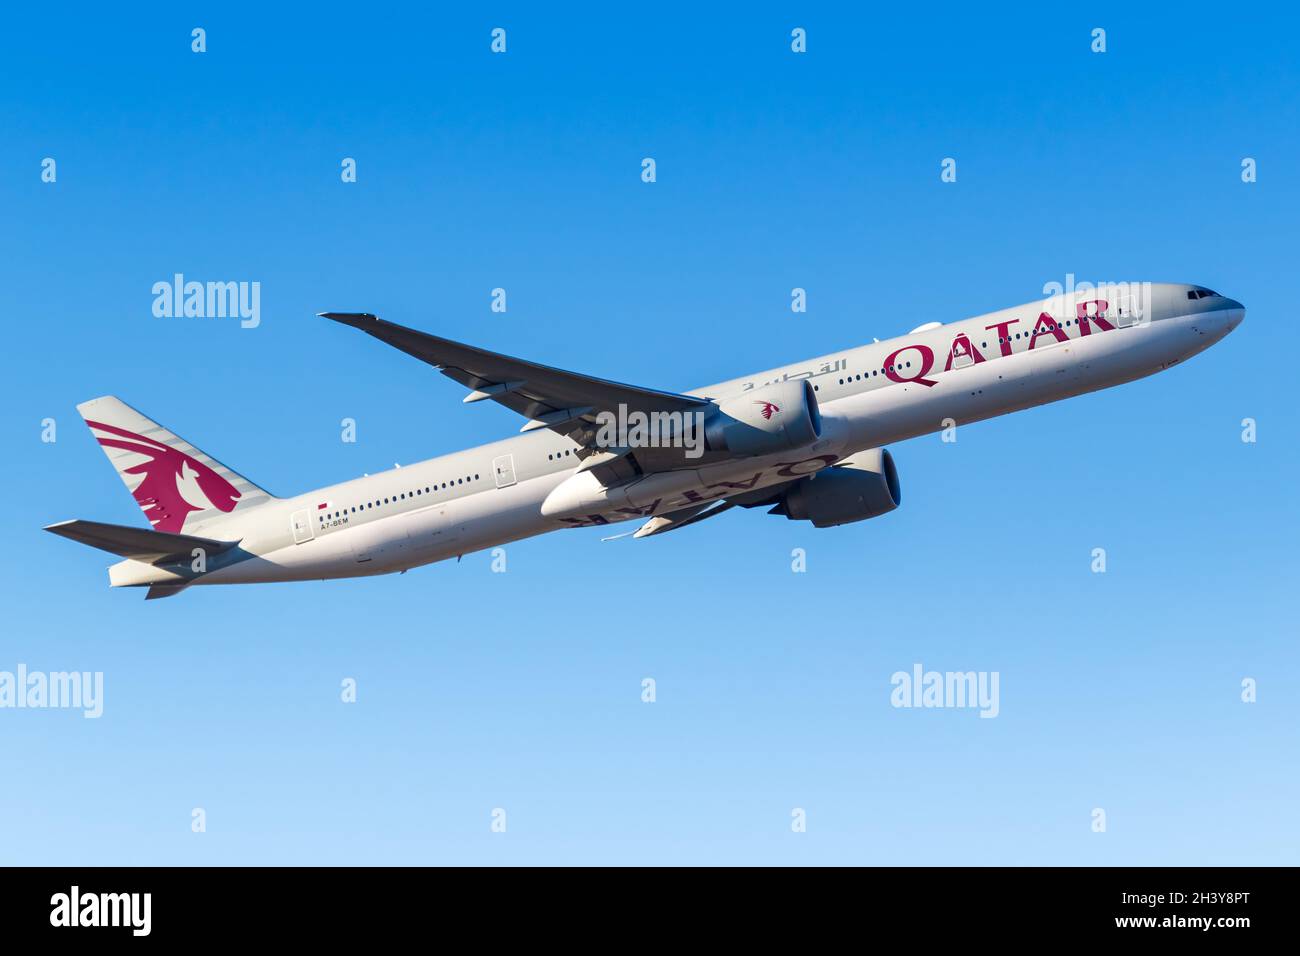 Qatar Airways Boeing 777-300ER Aircraft Aeroporto di Francoforte in Germania Foto Stock